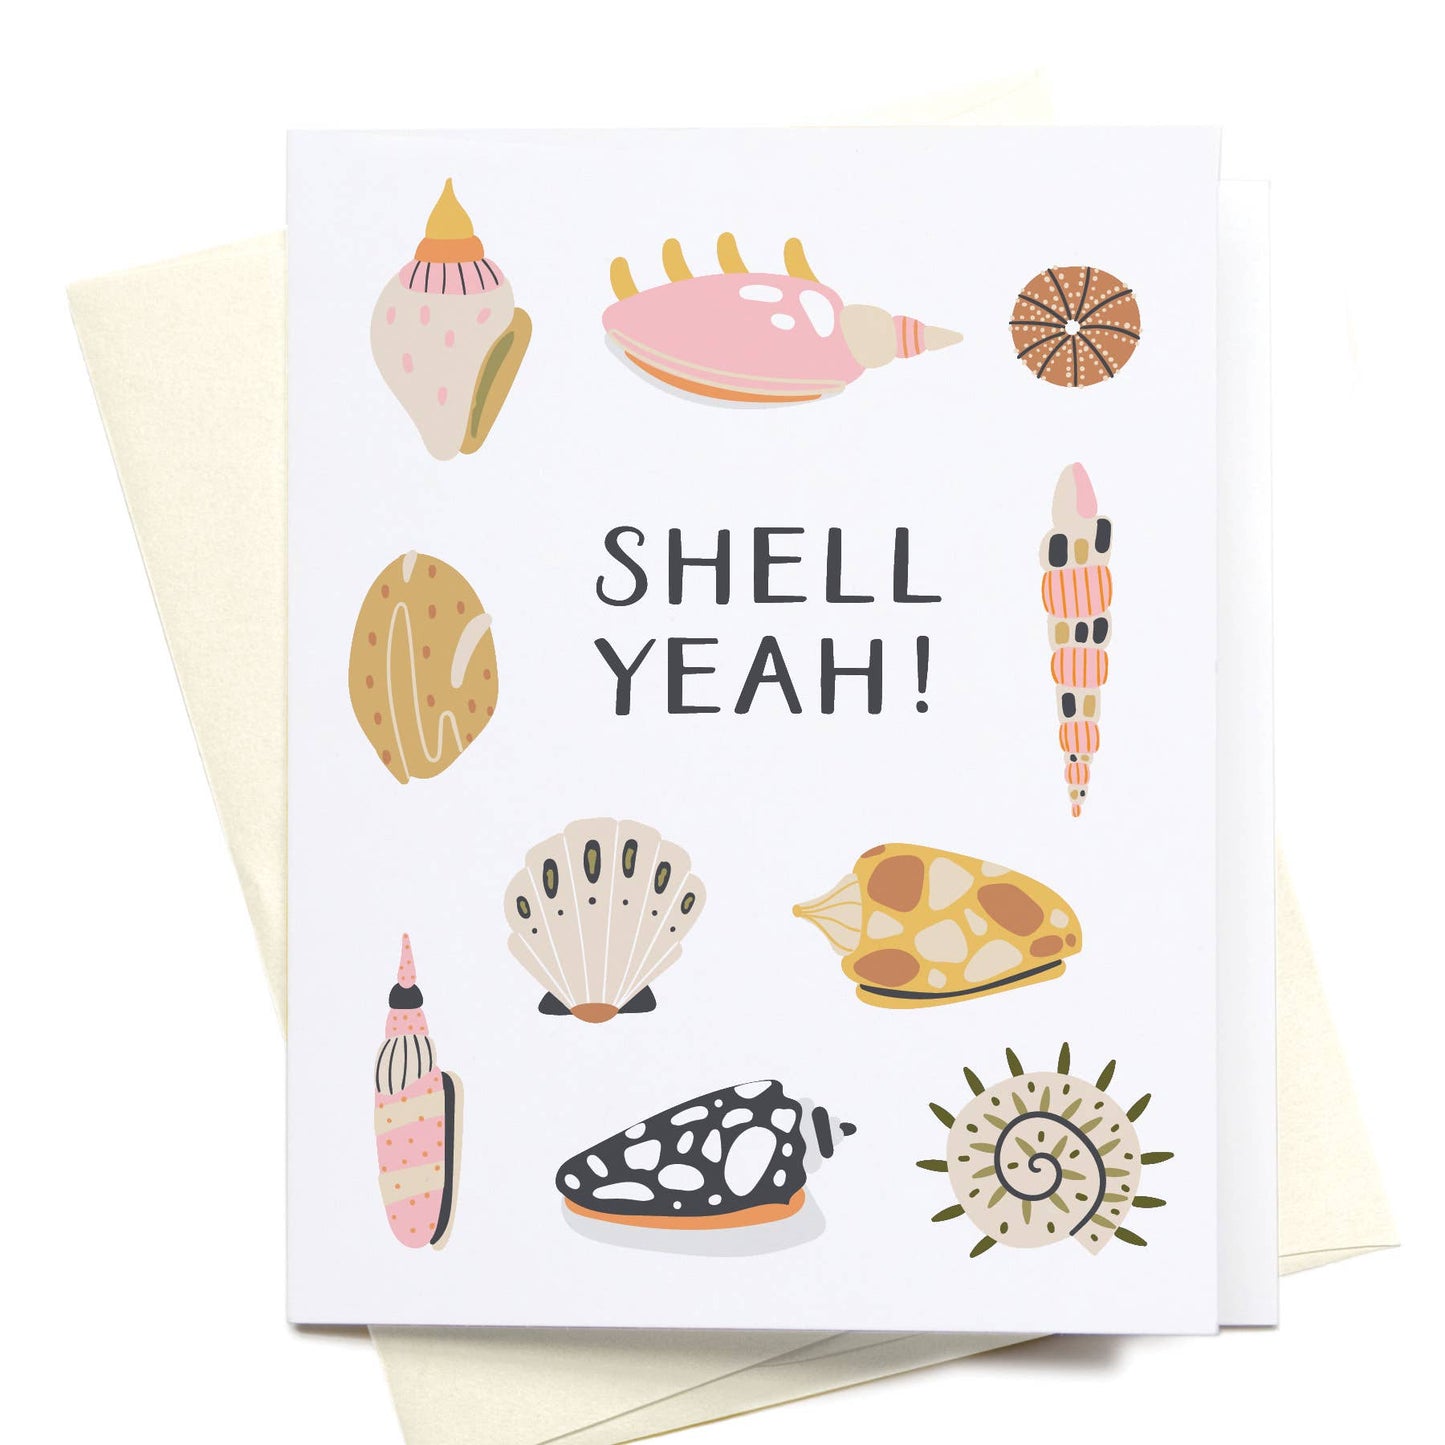 "Shell Yeah!" Greeting Card